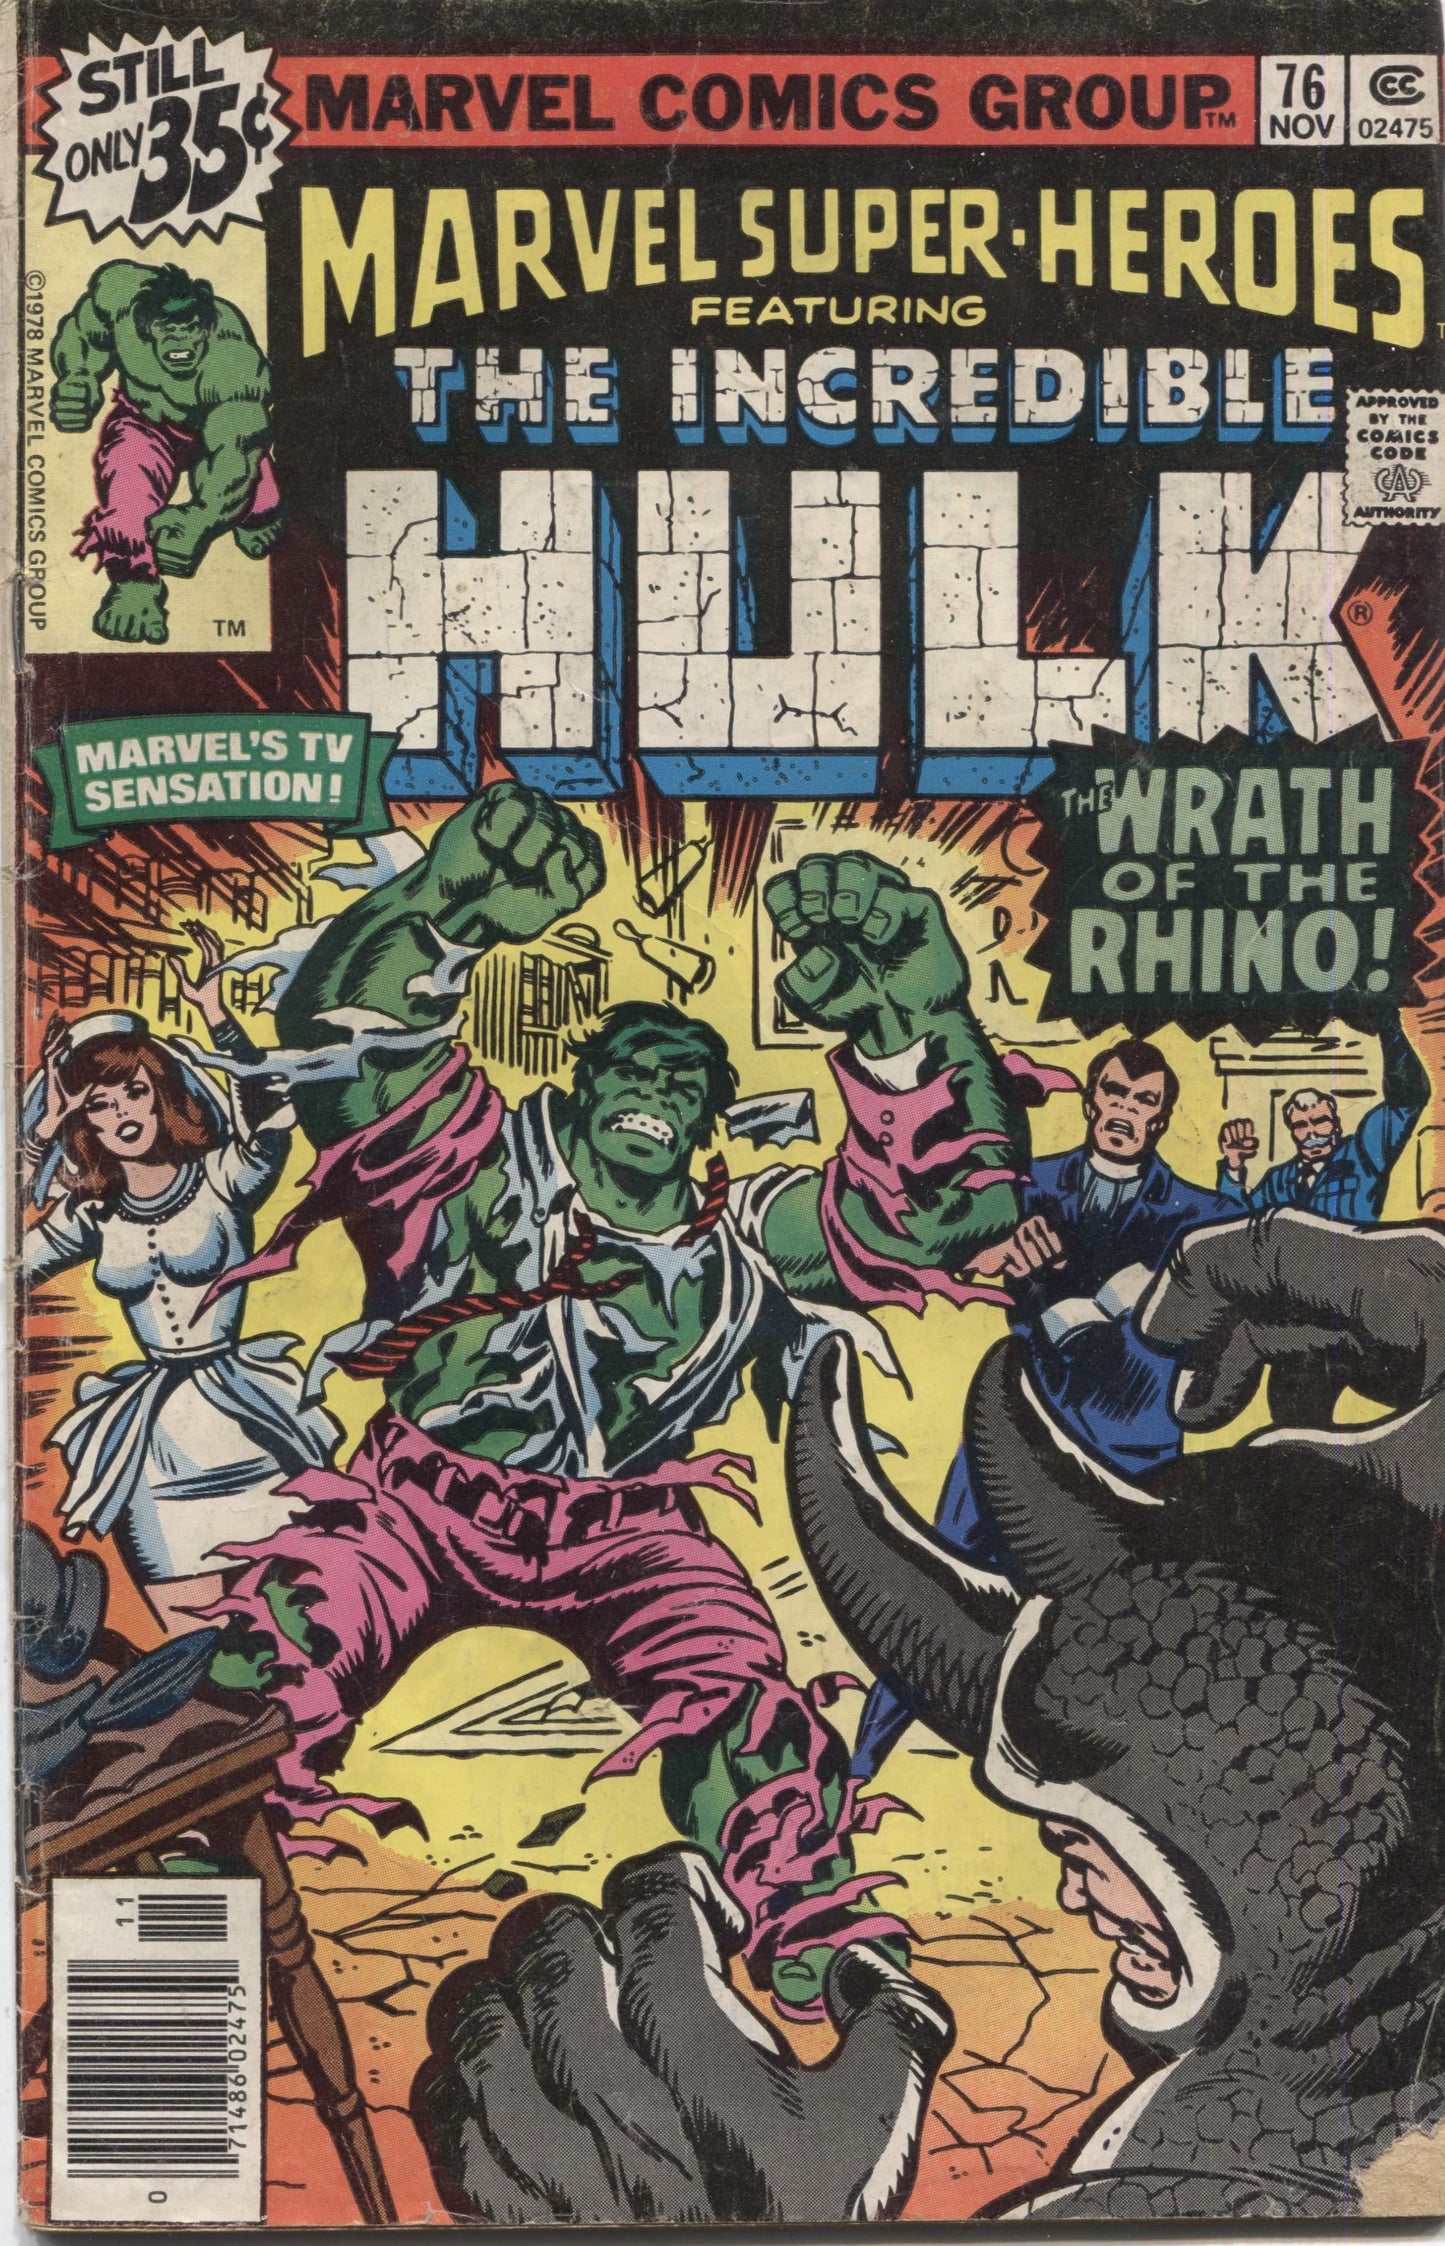 Marvel Super-Heroes Featuring the Incredible Hulk, No 76, Marvel Comics, November 1978